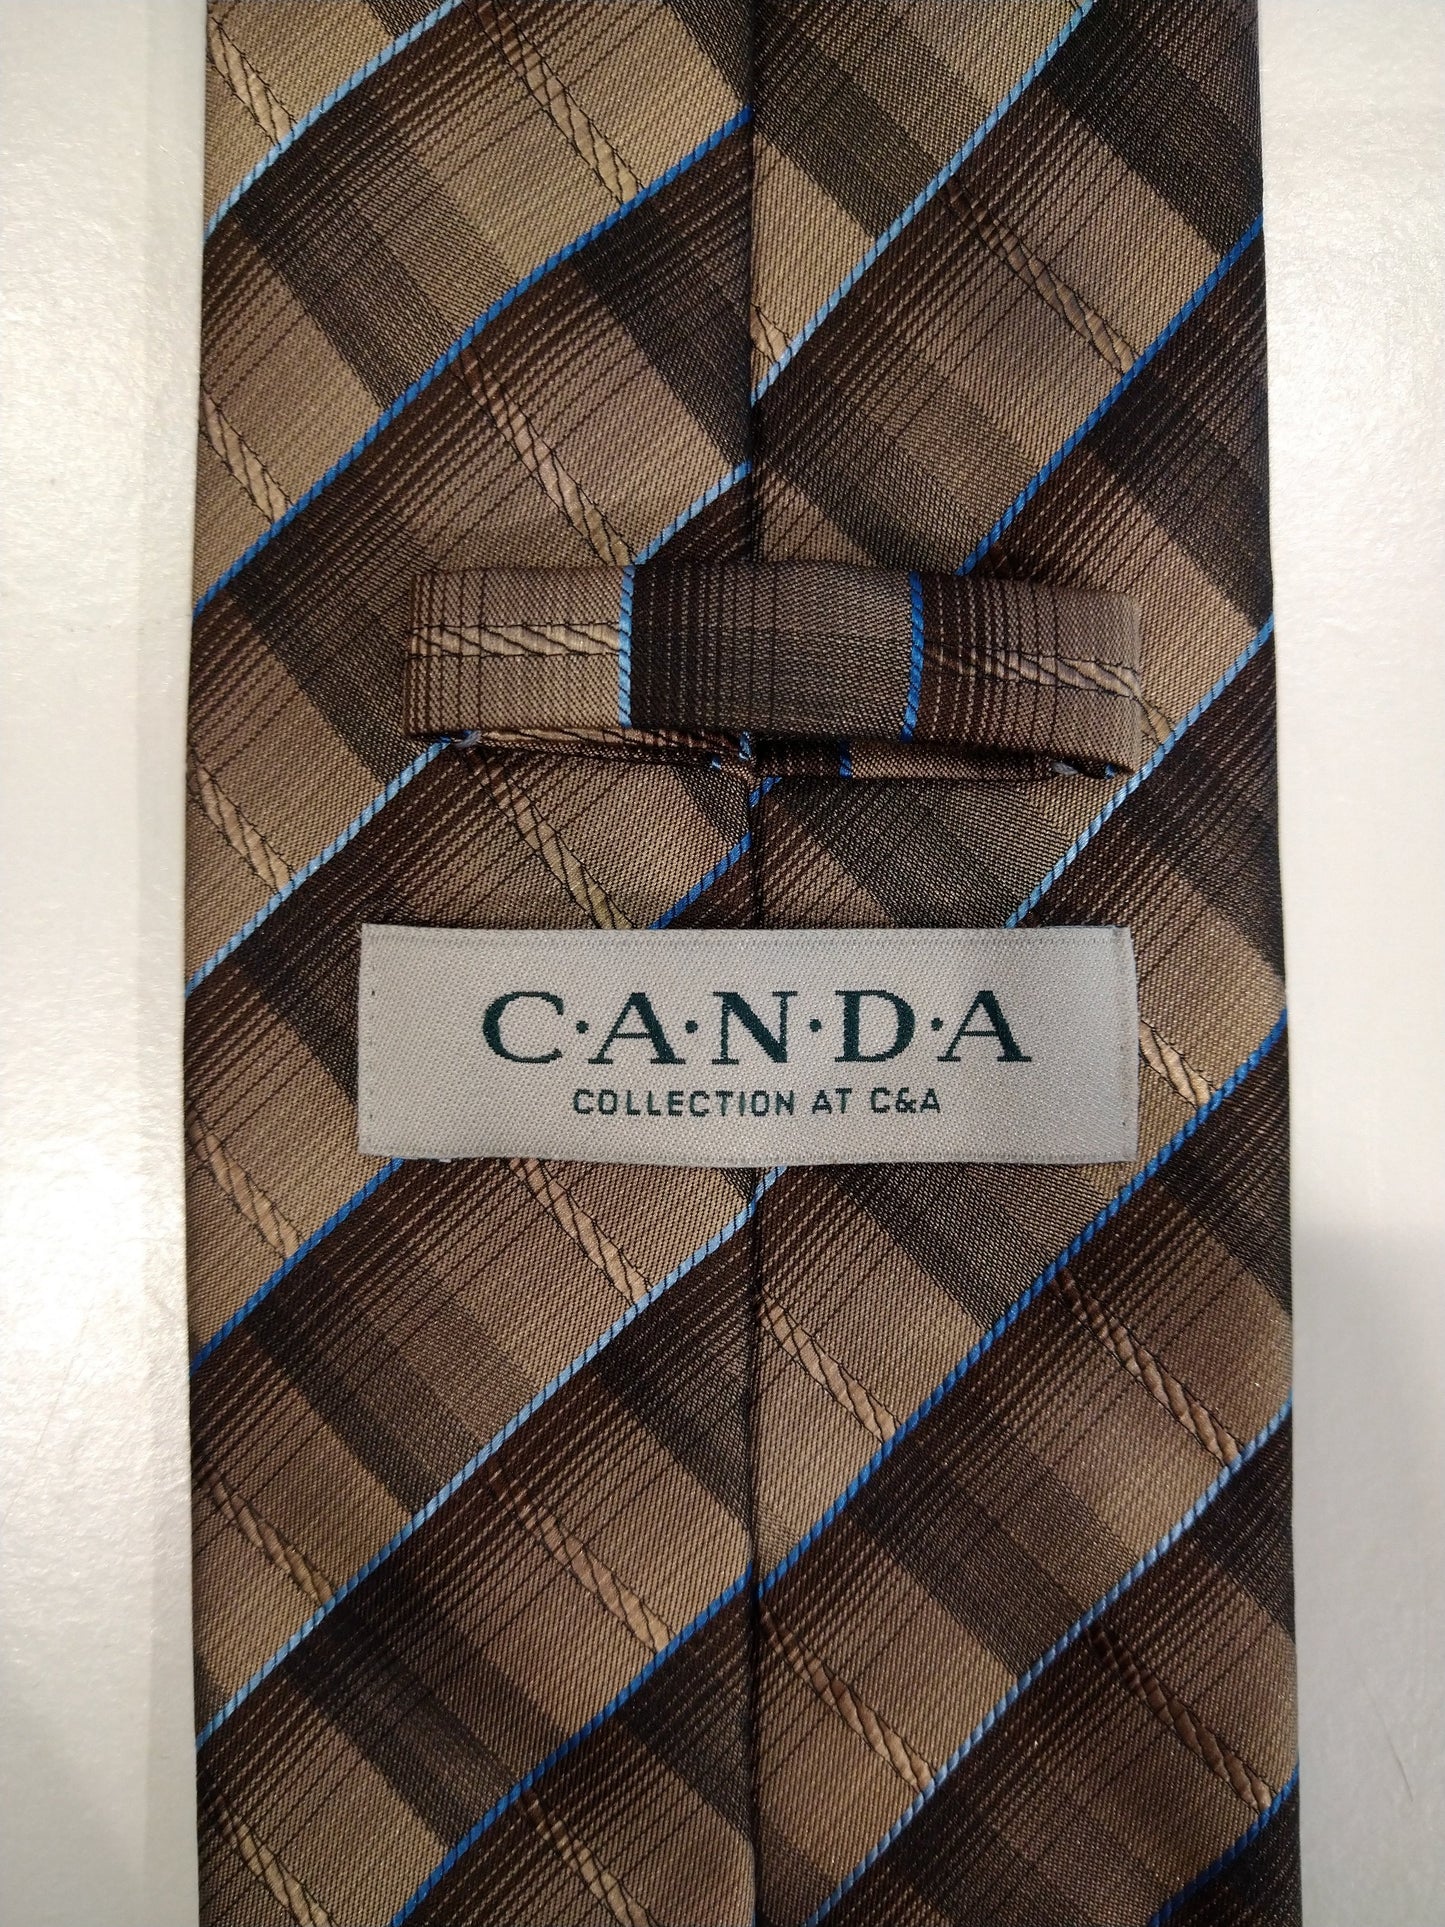 Vintage Canda polyester tie. Nice vintage motif.